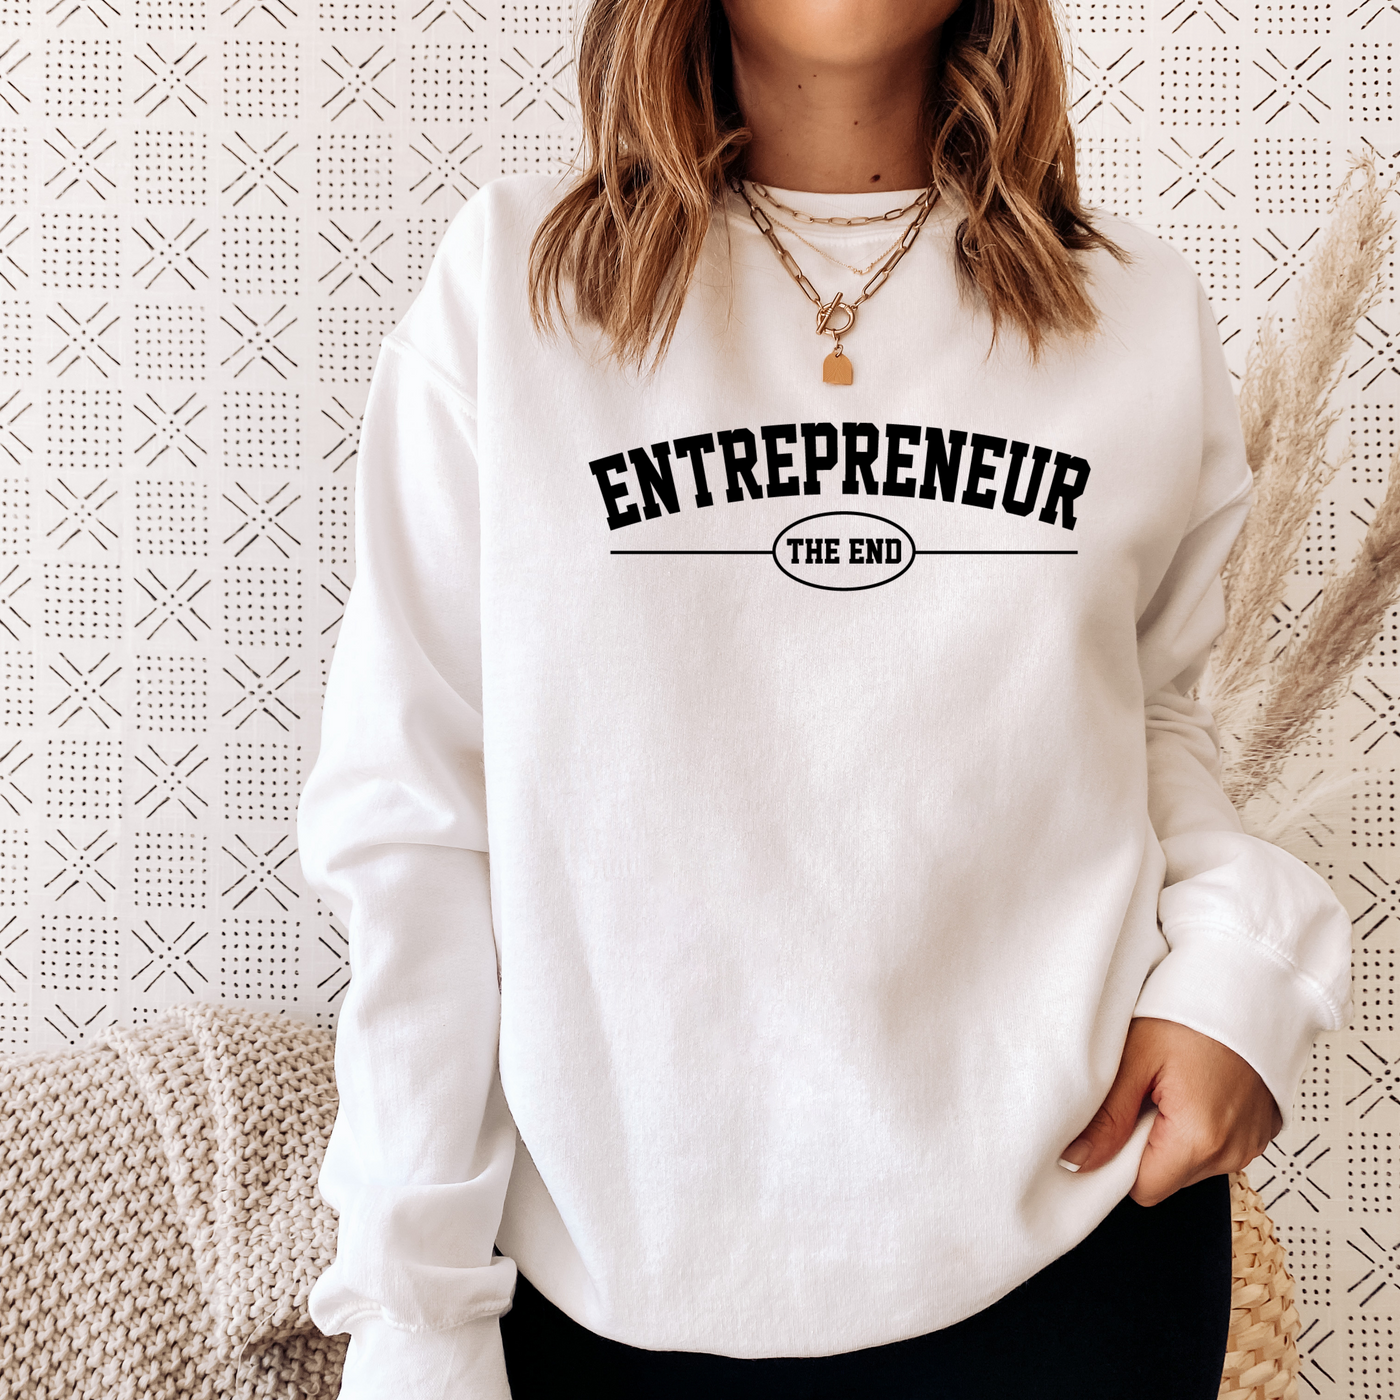 Entrepreneur "The End Collection" Crewneck Sweatshirt